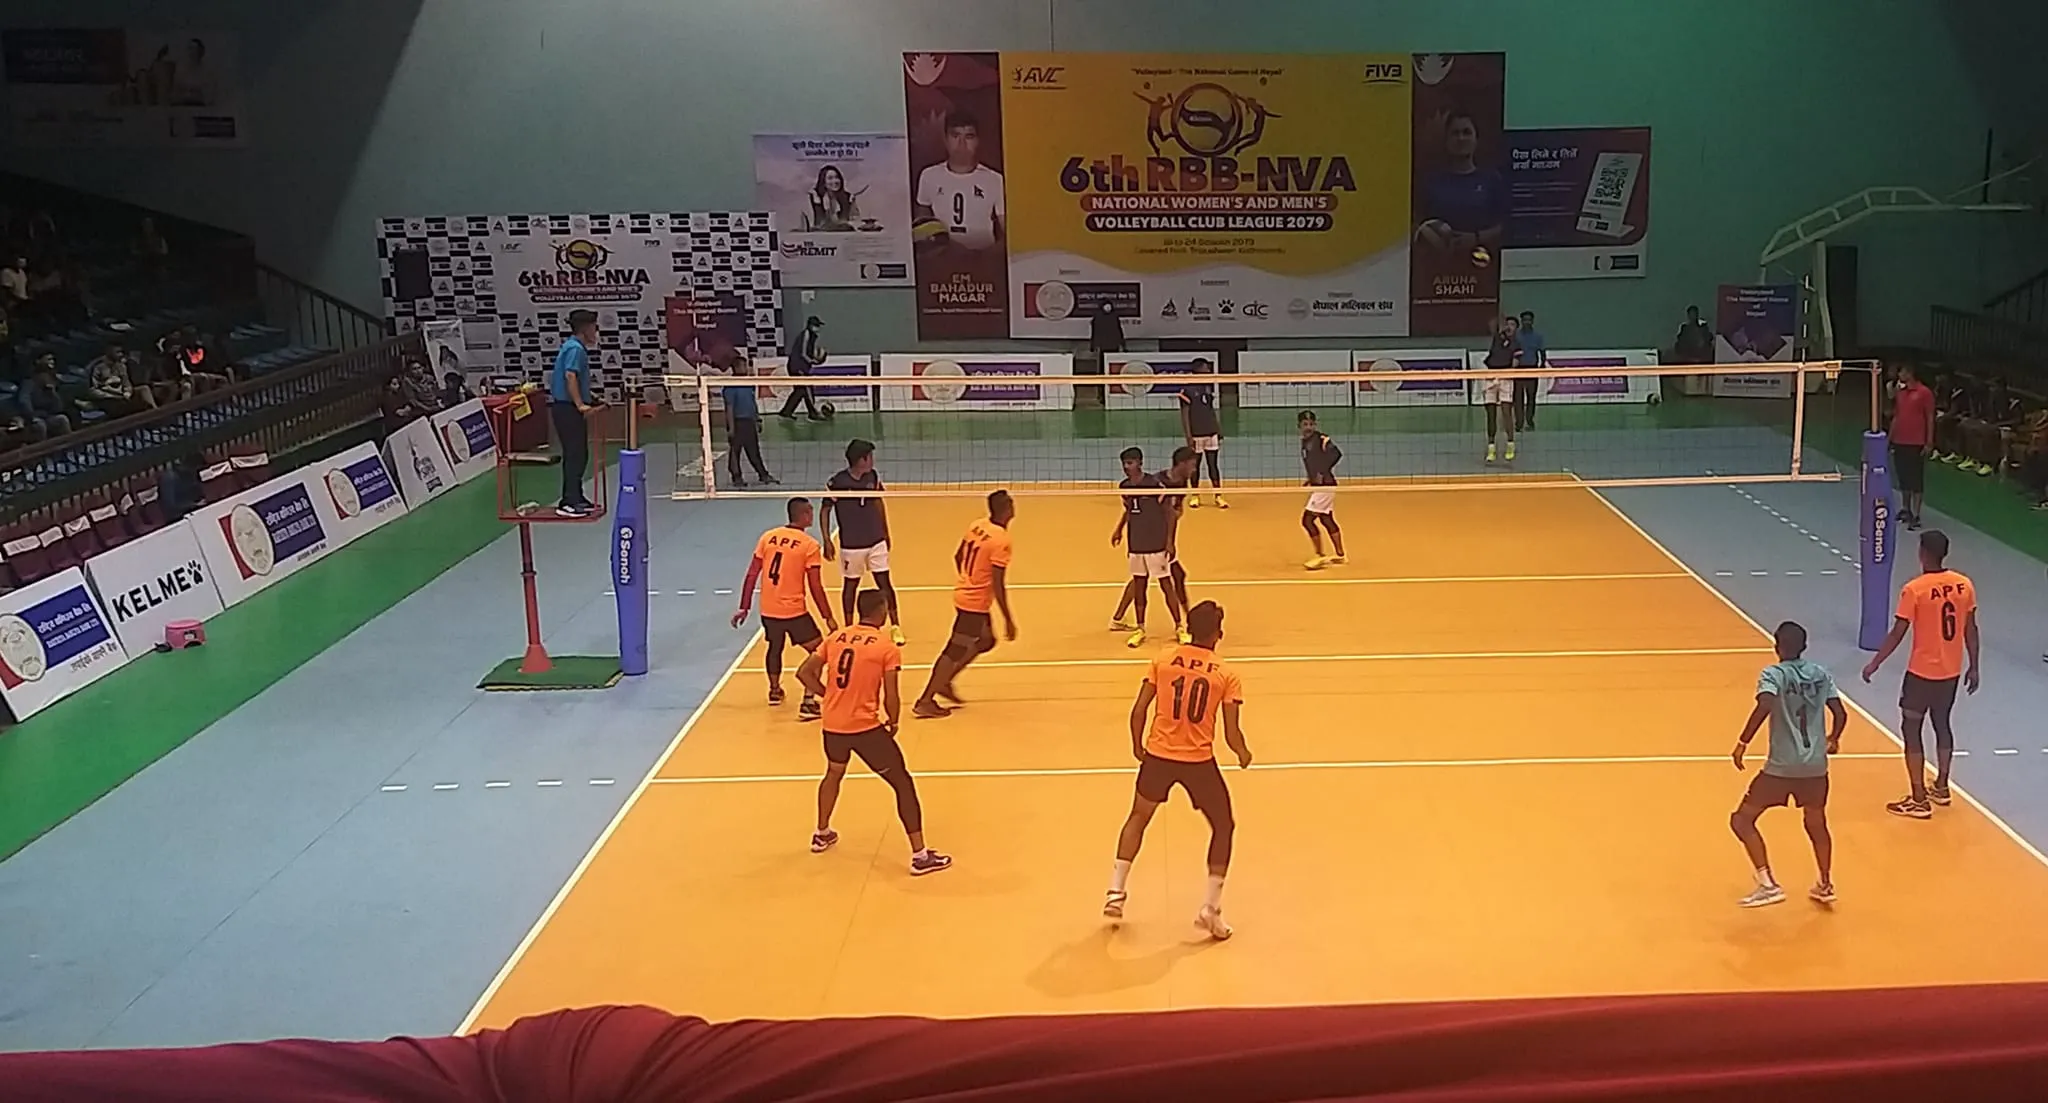 Nepal volleyball association featured photo